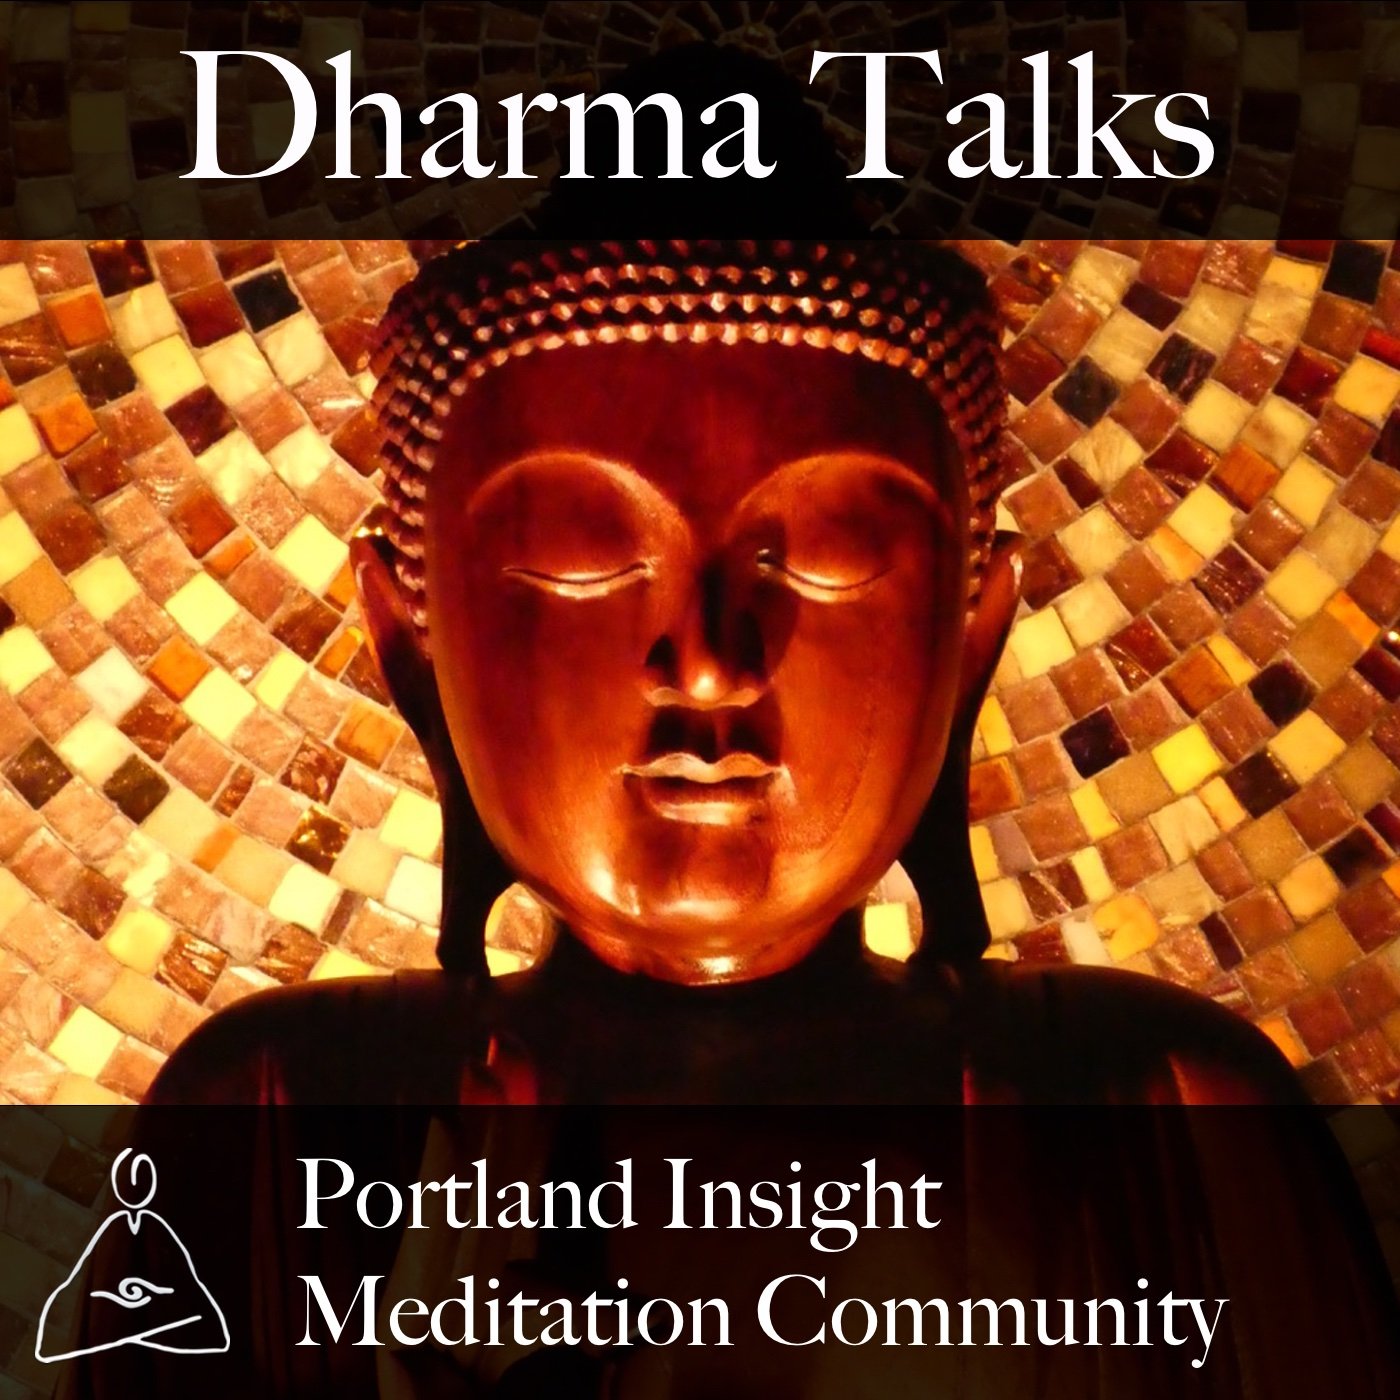 The Portland Insight Meditation Center Podcast

https://t.co/Q3azuxDlqe